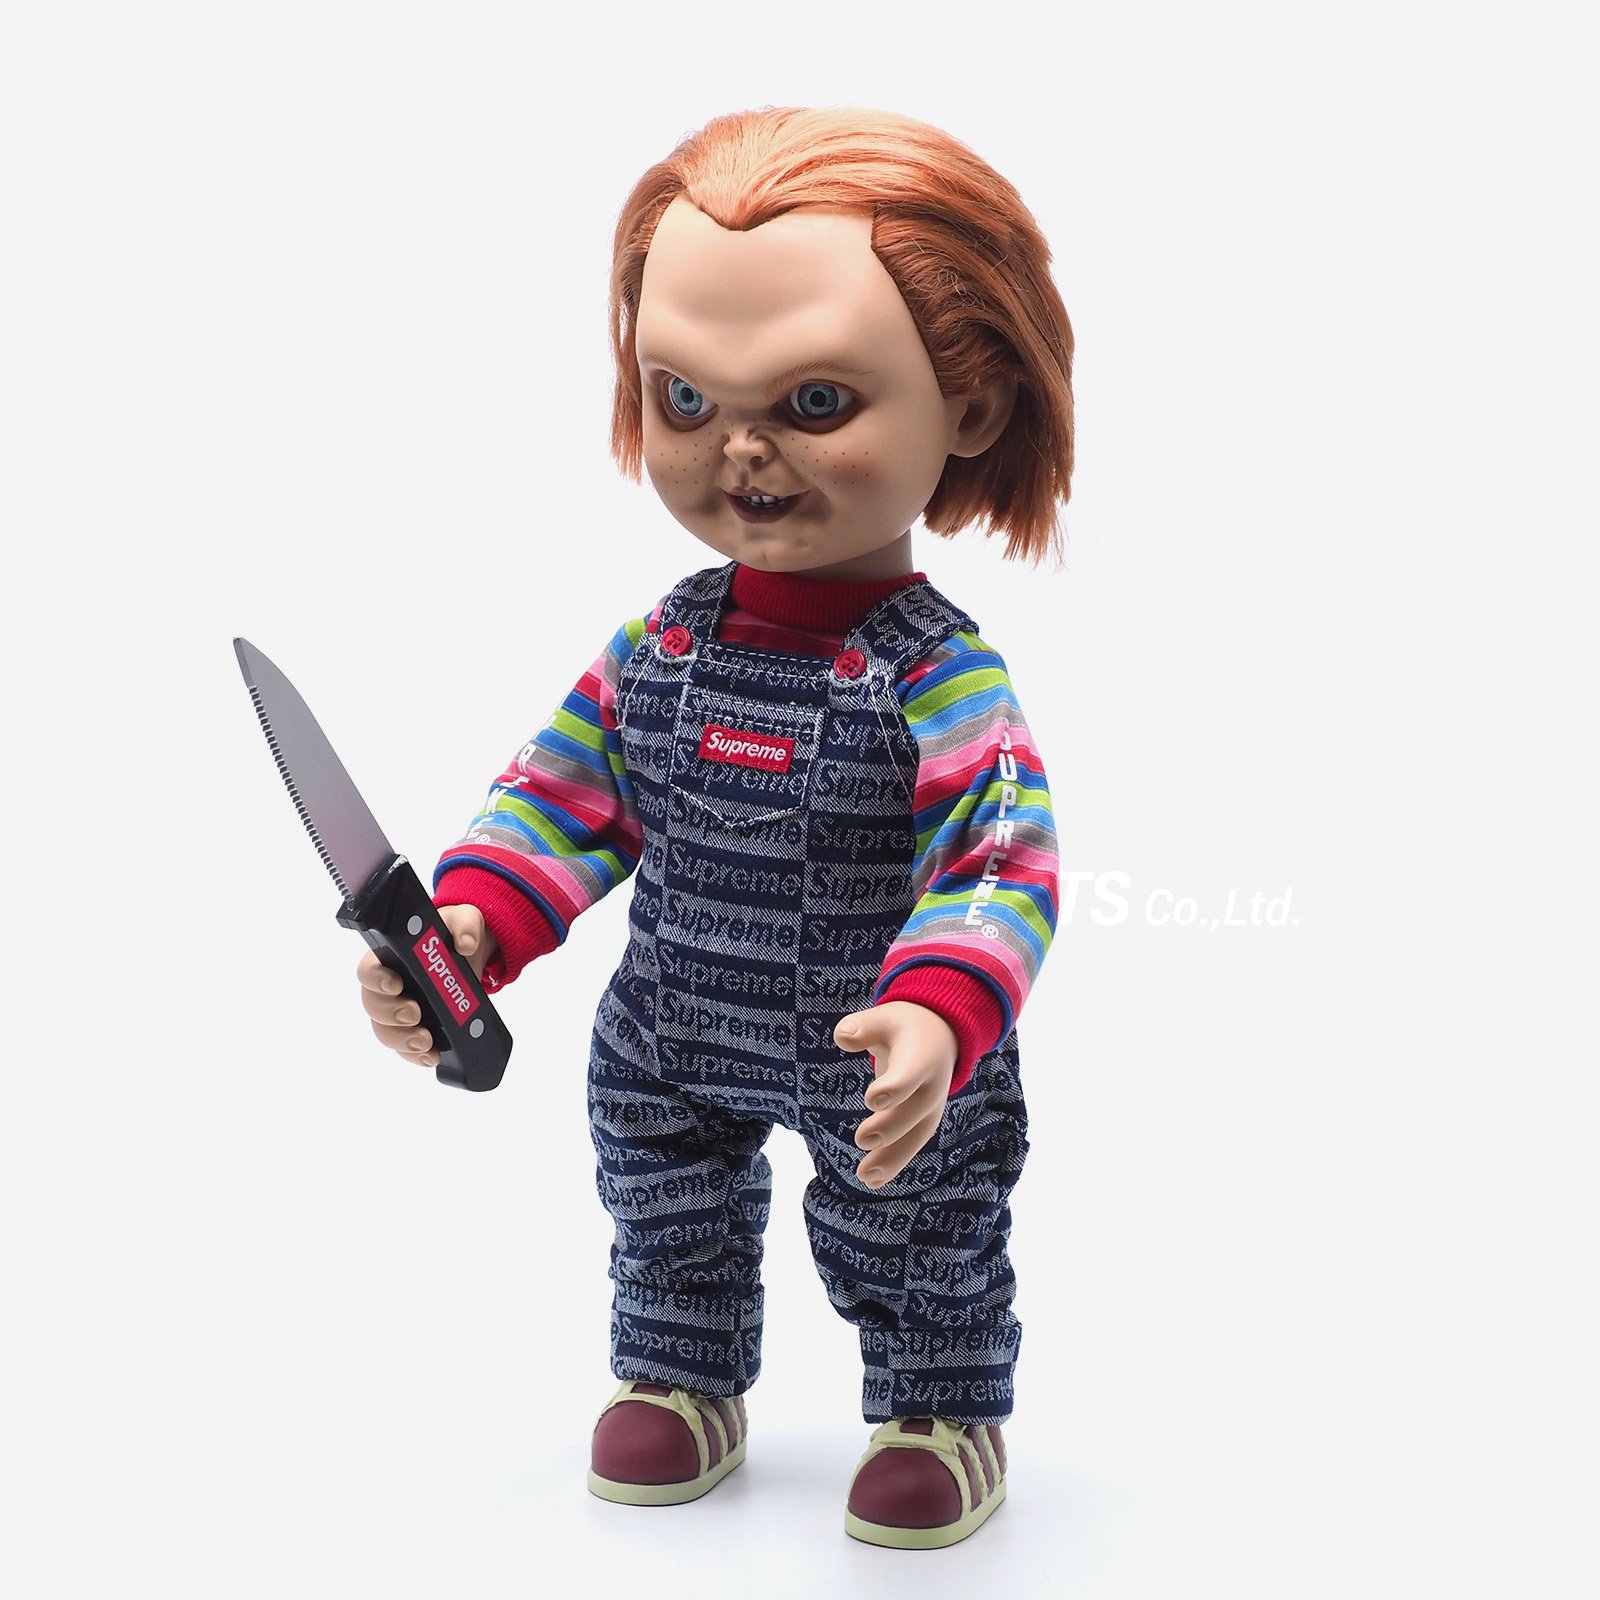 Supreme Chucky Doll チャッキー ドール